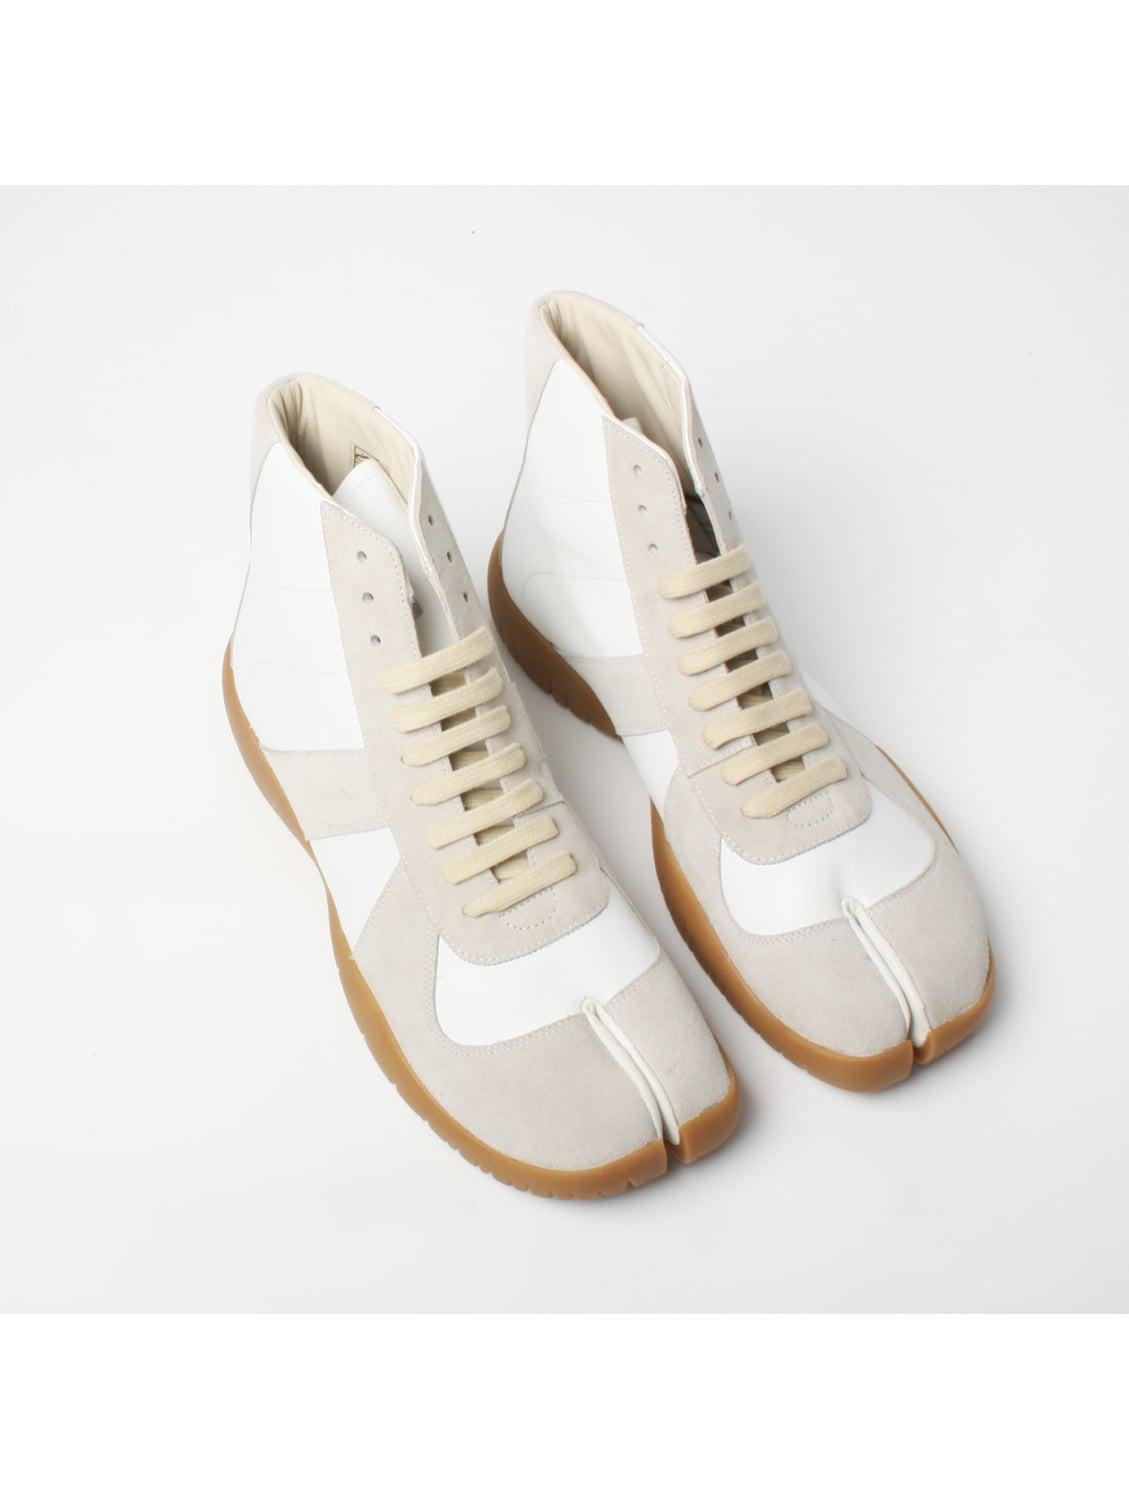 Maison Margiela Leather Men's Tabi Replica Sneaker Boots White for Men